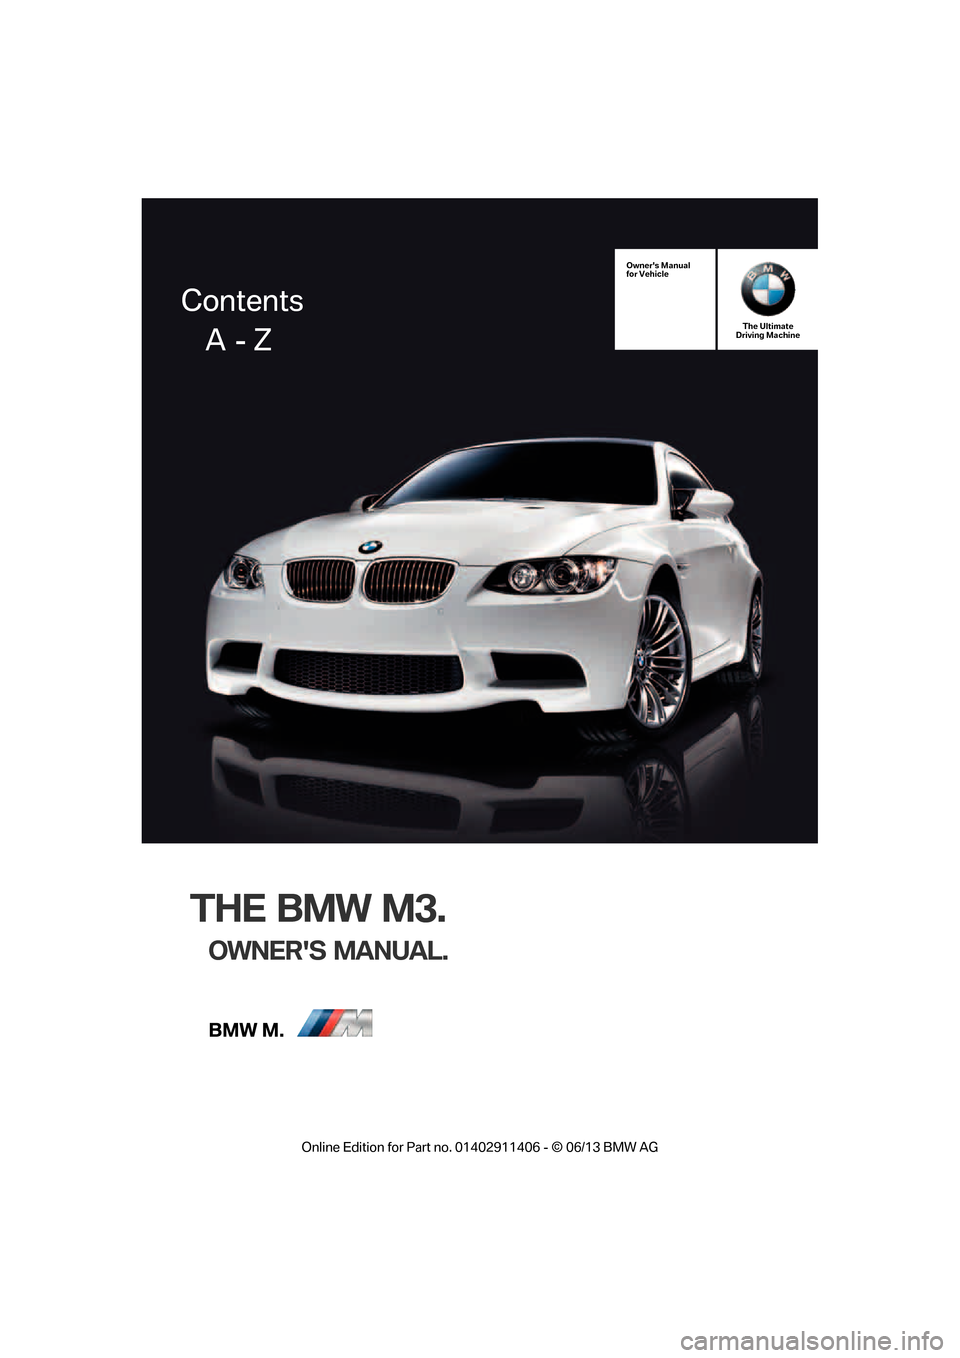 BMW M3 CONVERTIBLE 2013 E93 Owners Manual THE BMW M3.
OWNERS MANUAL.
Owners Manual
for VehicleThe Ultimate
Driving Machine
Contents
     A  - Z

�2�Q�O�L�Q�H �(�G�L�W�L�R�Q �I�R�U �3�D�U�W �Q�R� ����������� � �